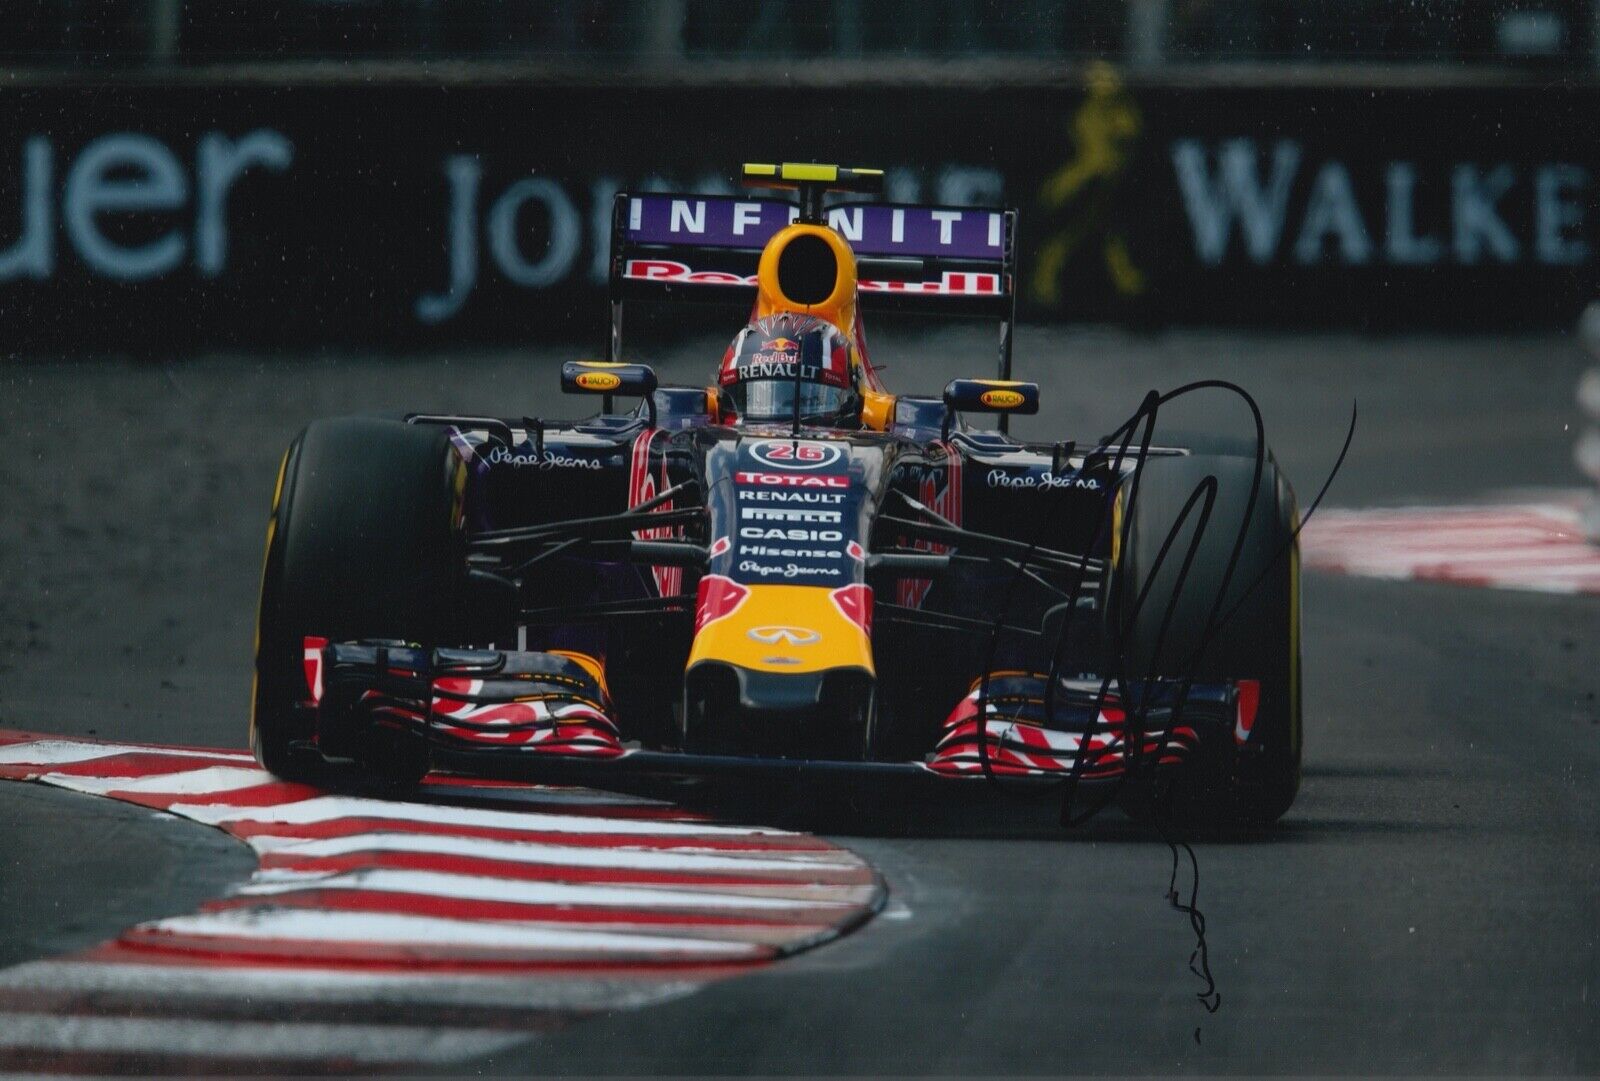 Daniil Kvyat Hand Signed 12x8 Photo Poster painting F1 Autograph Red Bull Racing